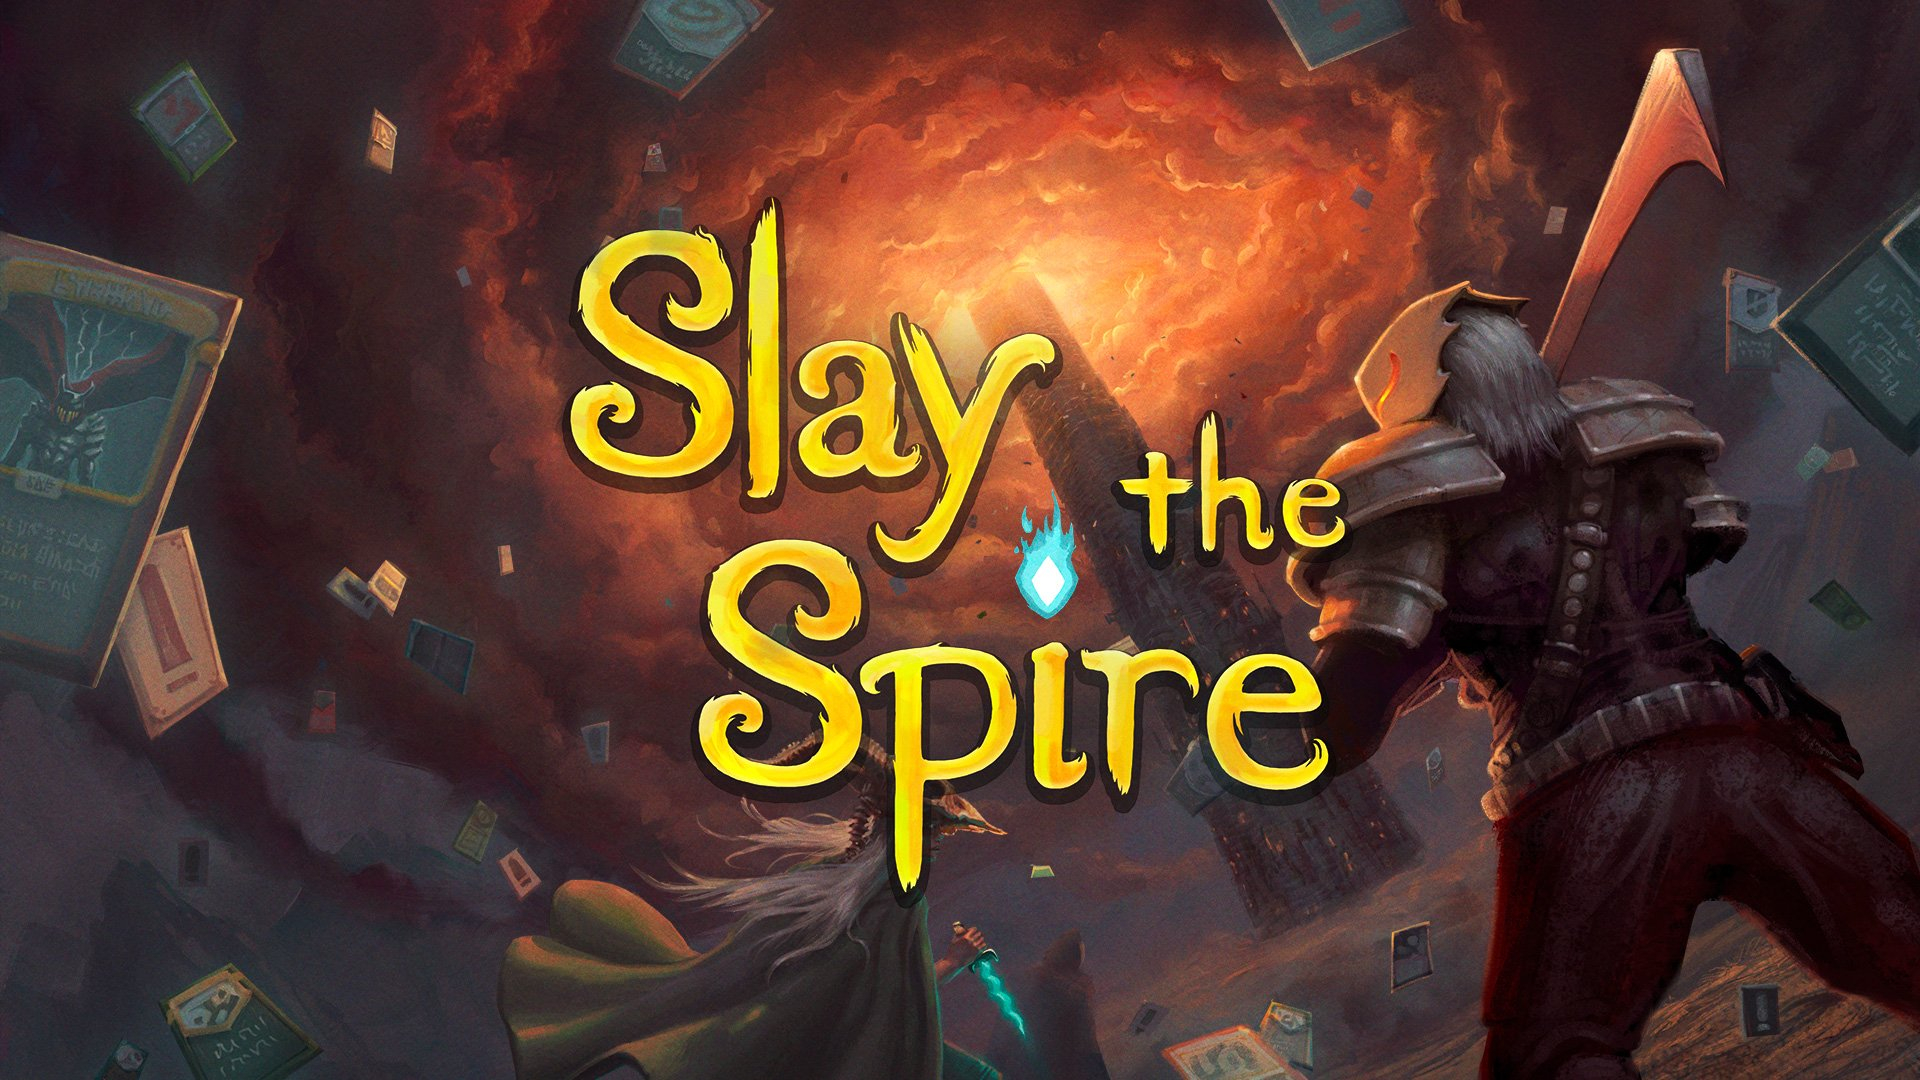 Обложка игры Slay the Spire